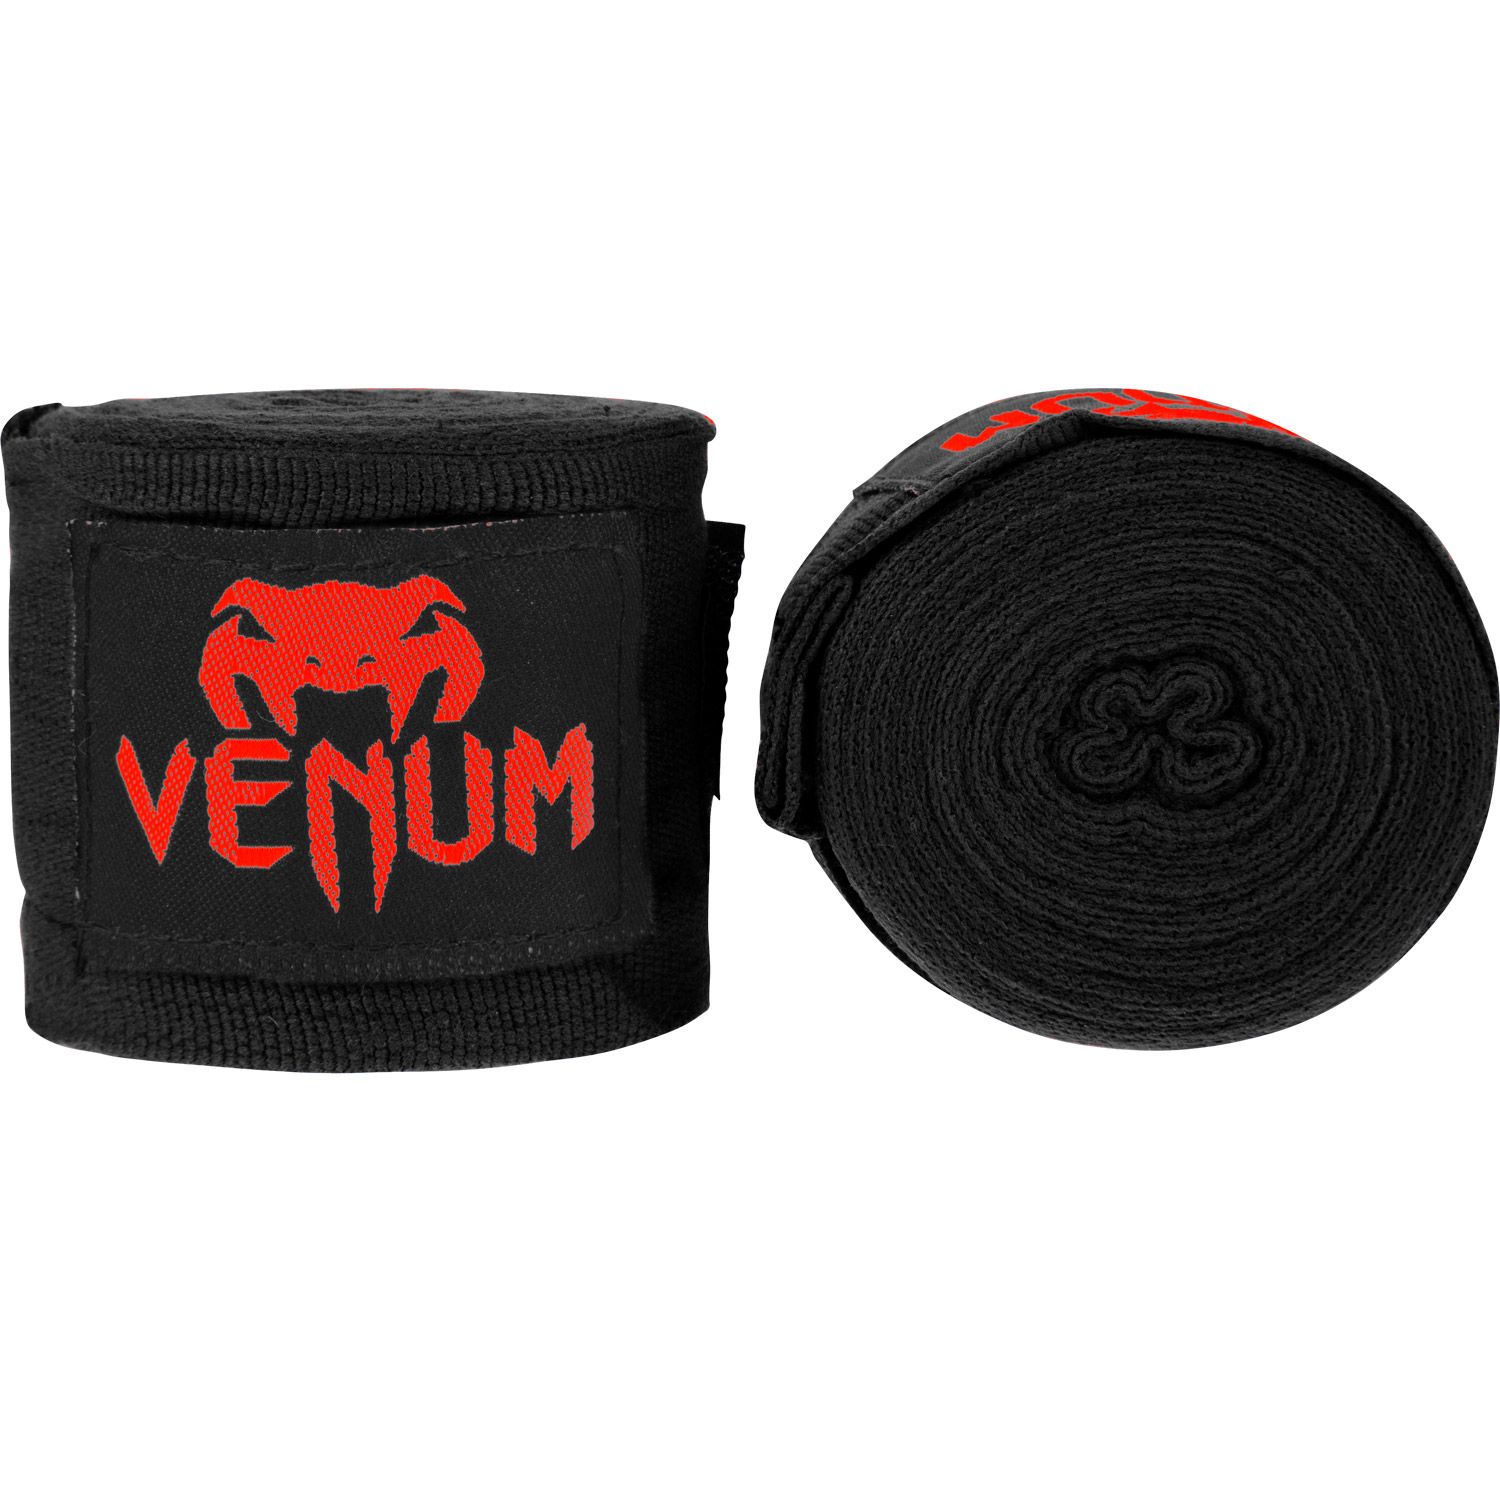 Venum Kontact Boxing Handwraps - 4m - Black/Red